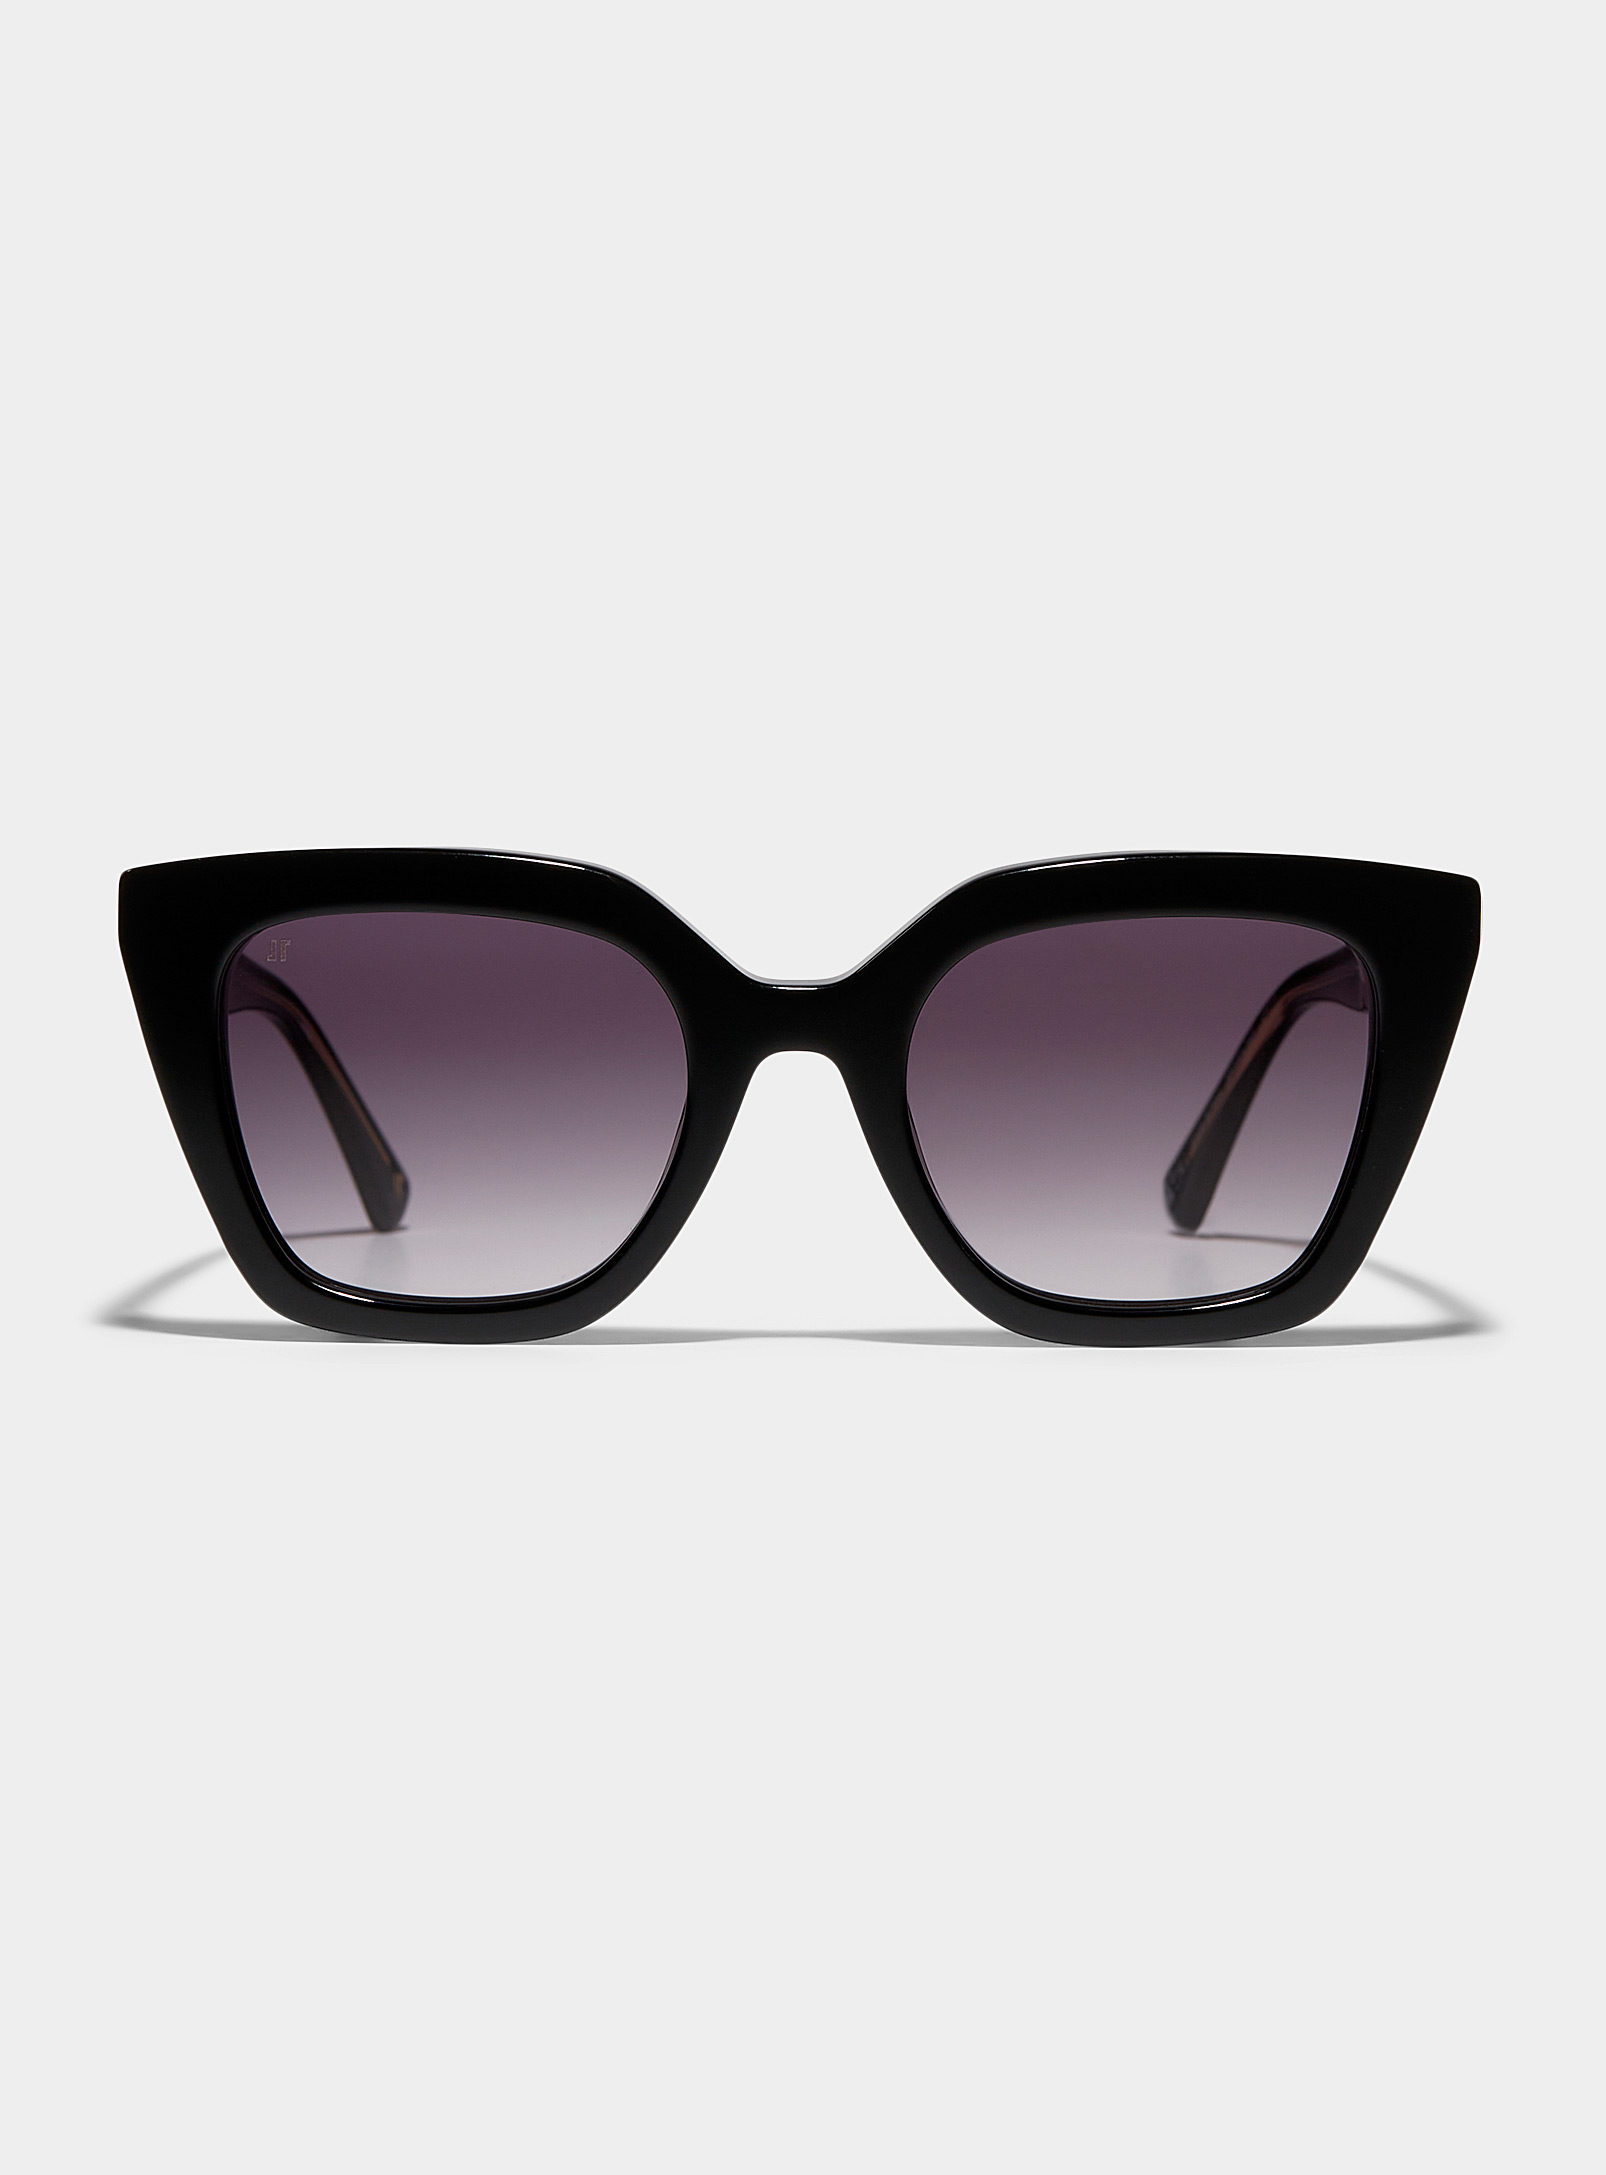 Jimmy Fairly - Women's Wind cat-eye sunglasses